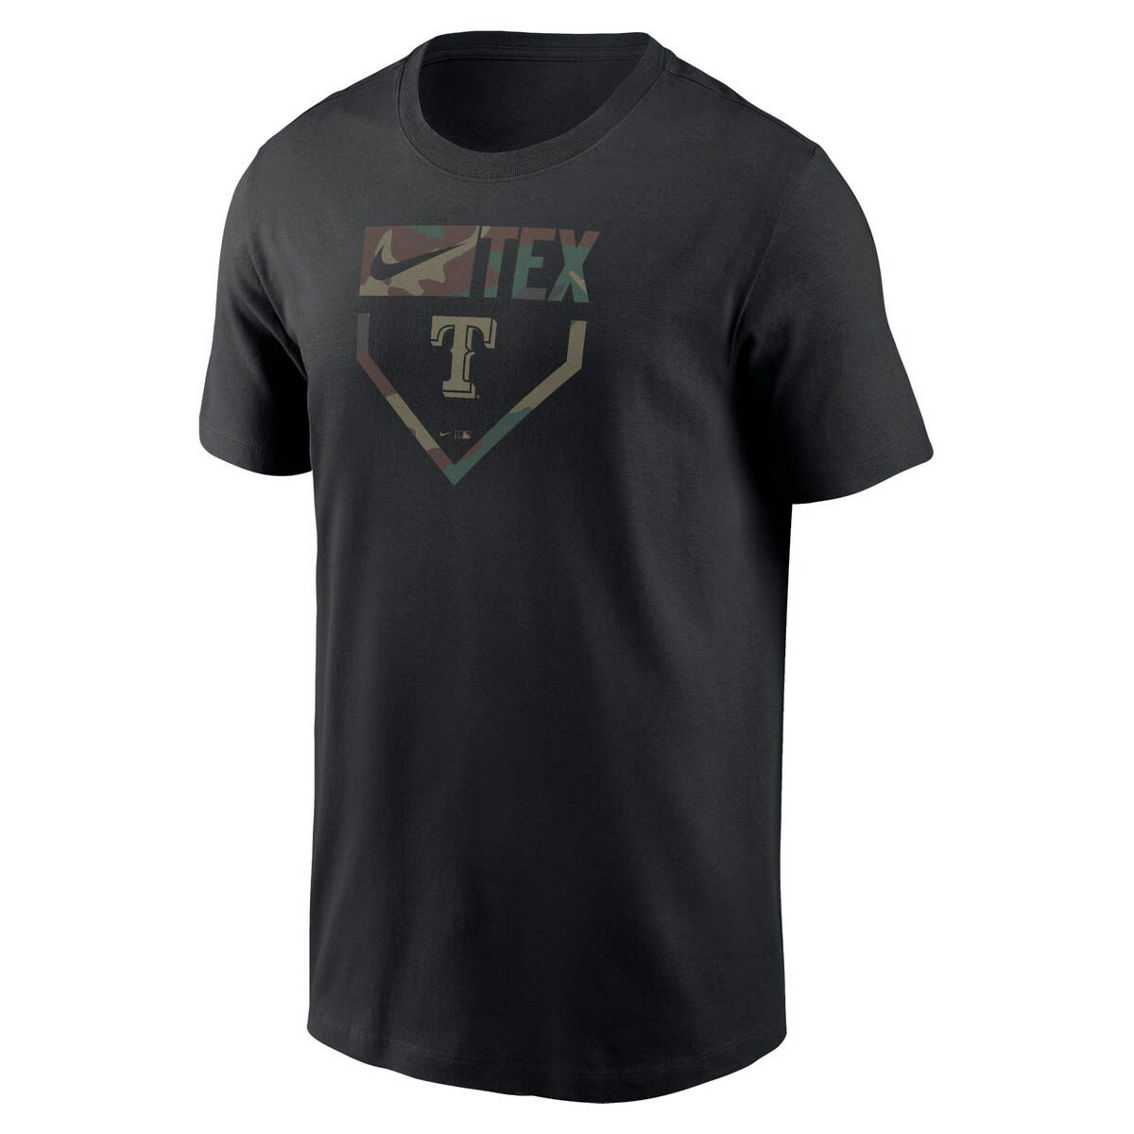 Nike Men's Black Texas Rangers Camo T-Shirt - Image 3 of 4